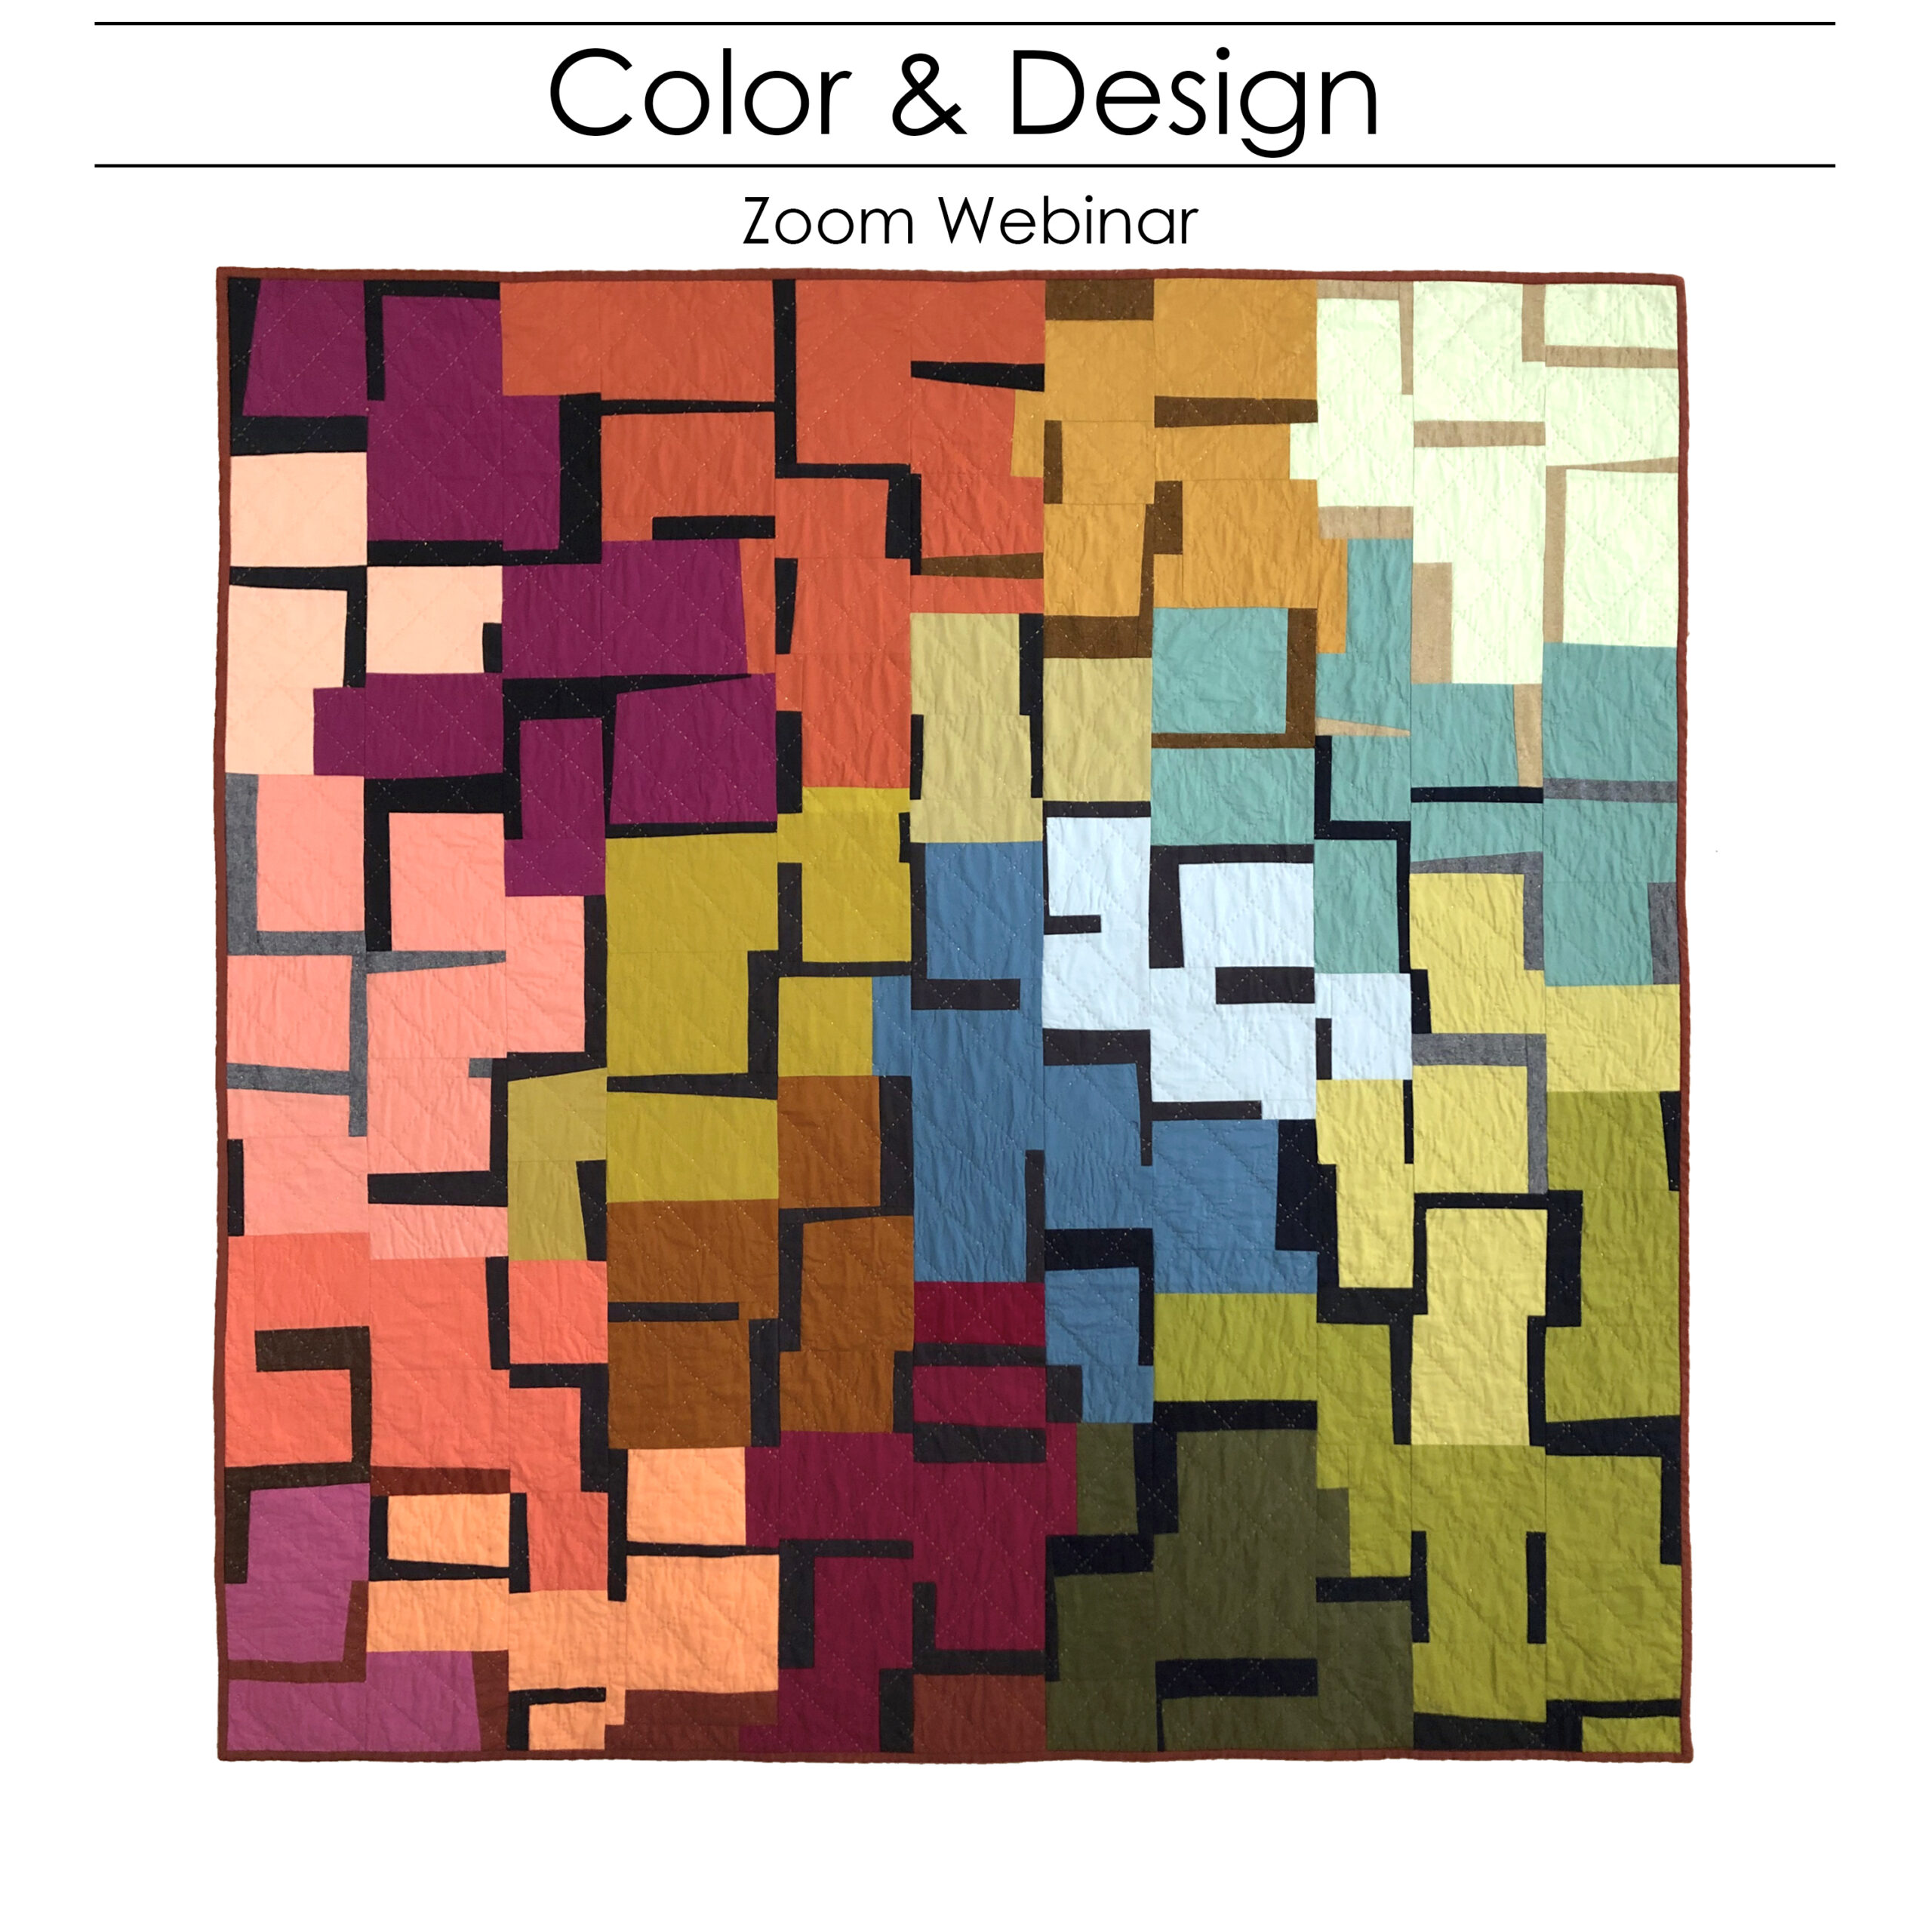 Color and Design Presentation